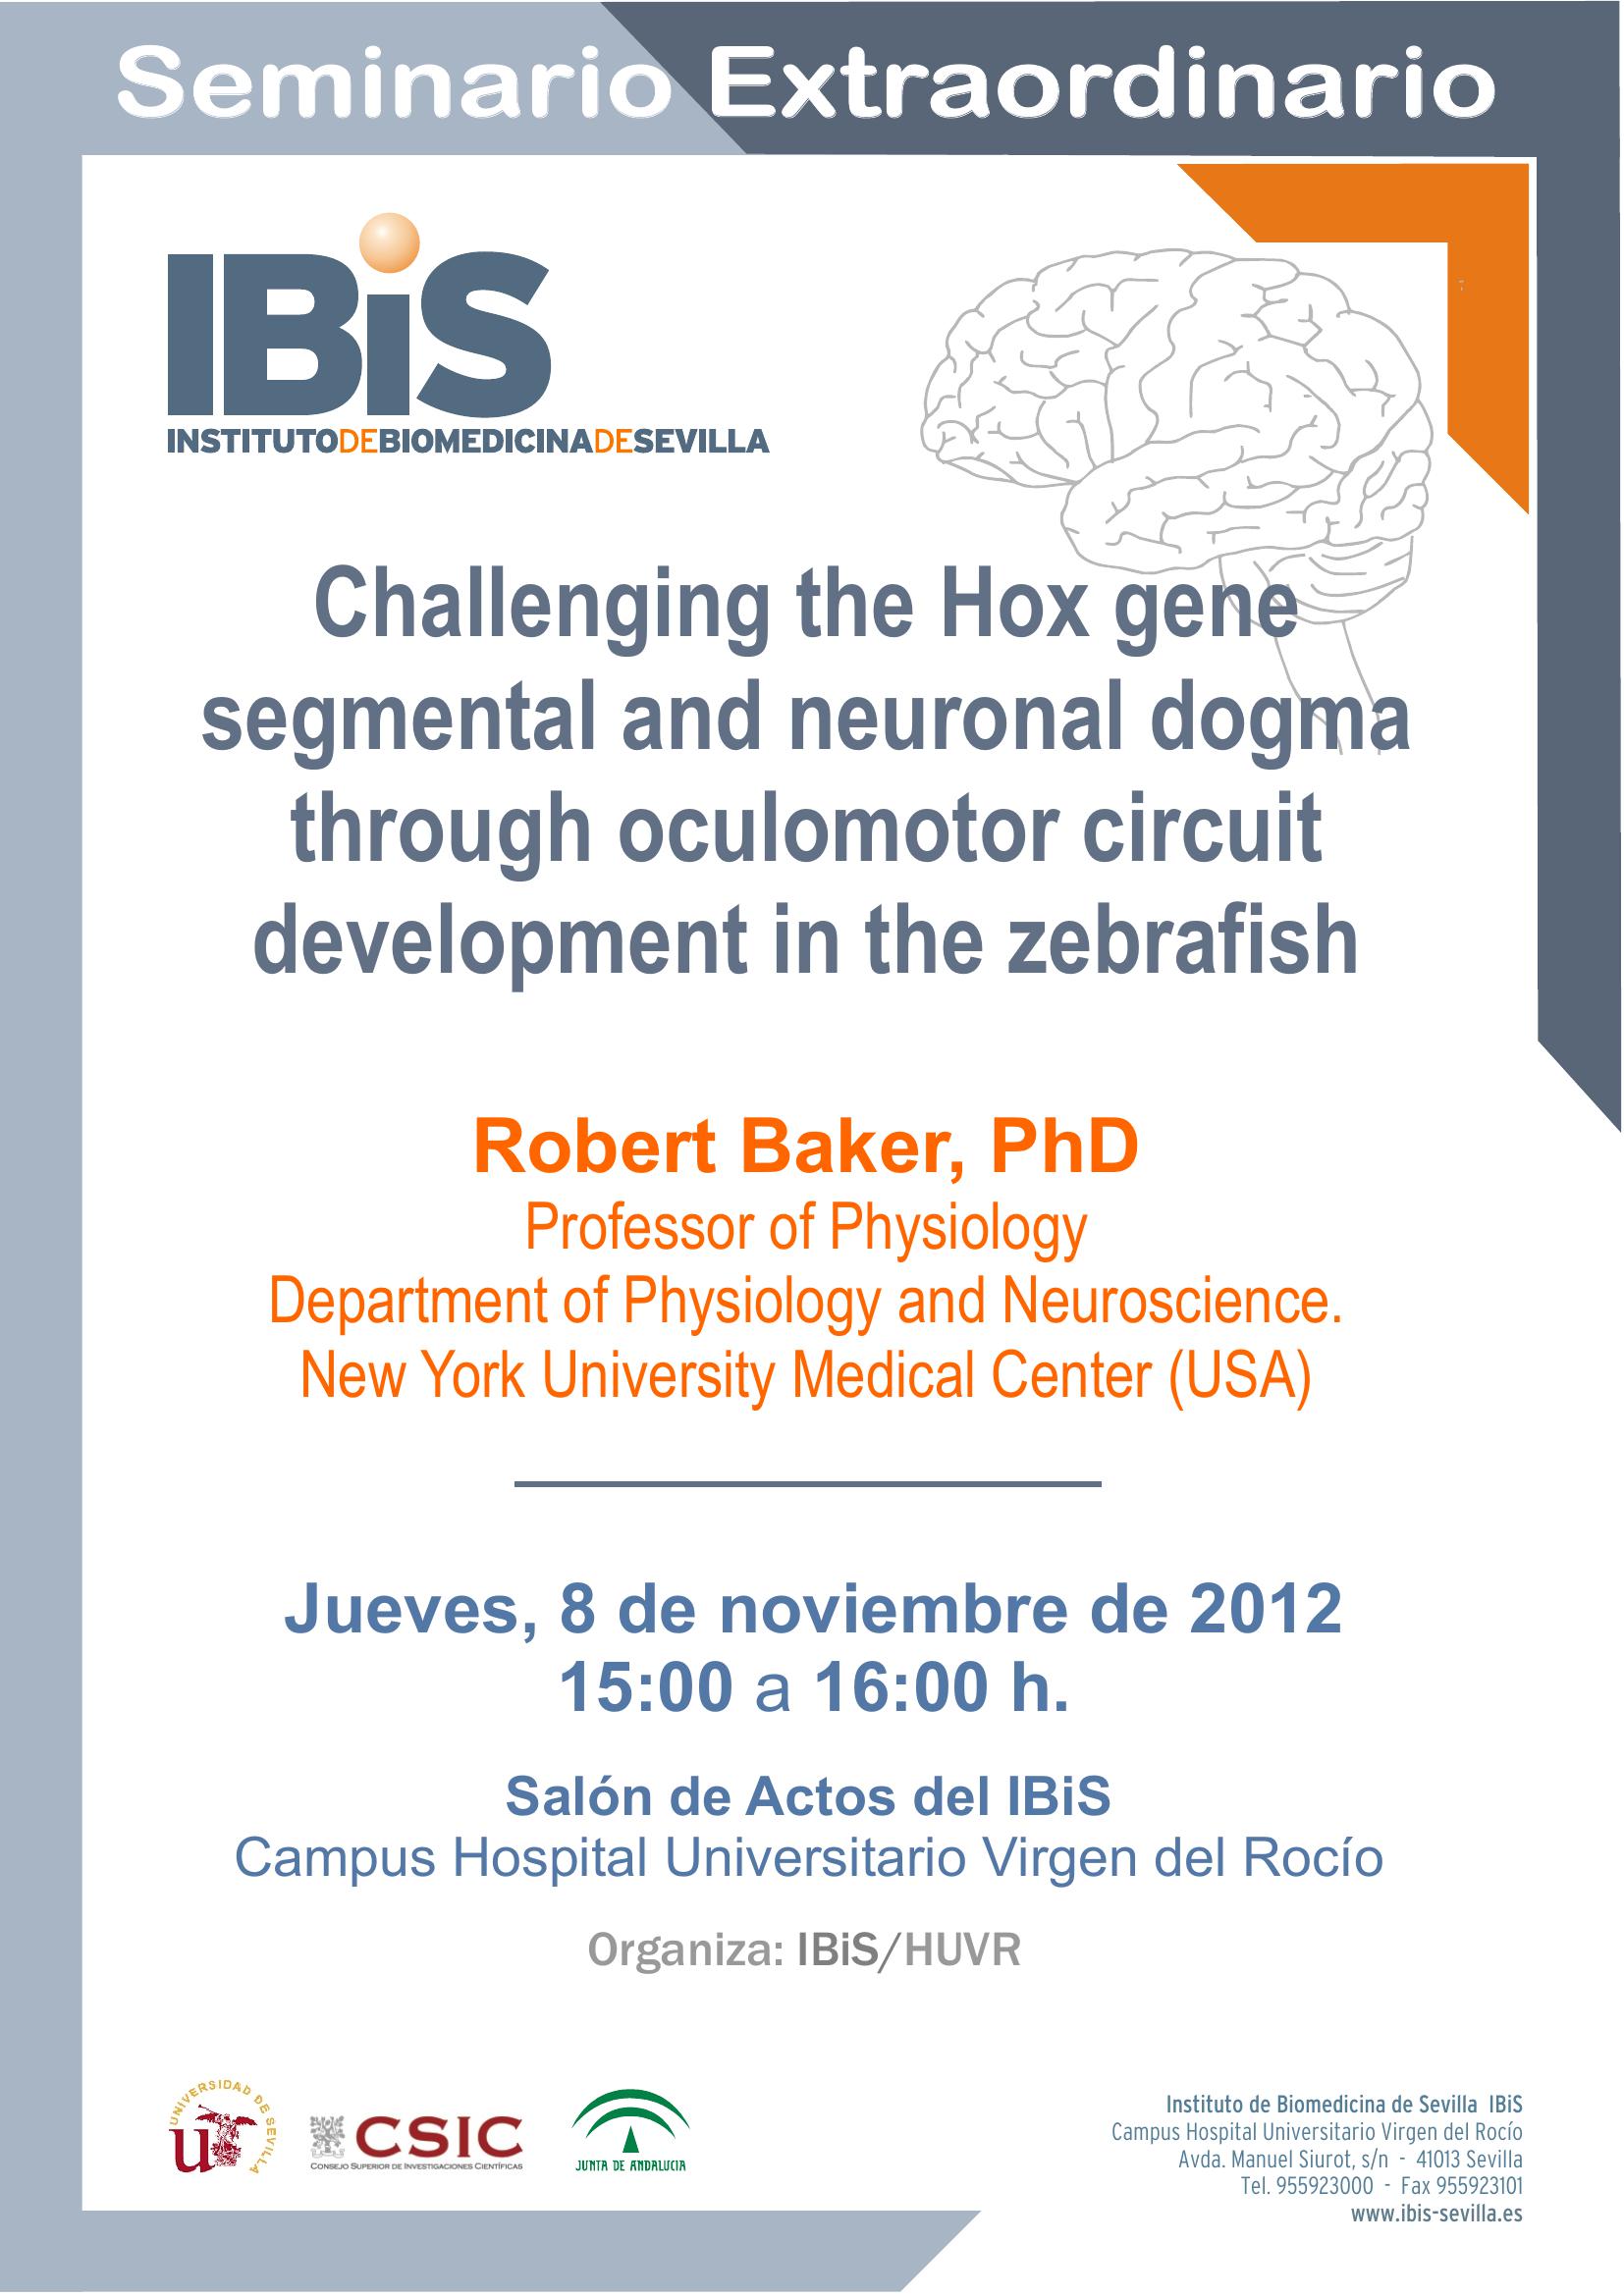 Poster: Challenging the Hox gene segmental and neuronal dogma through oculomotor circuit development in the zebrafish.